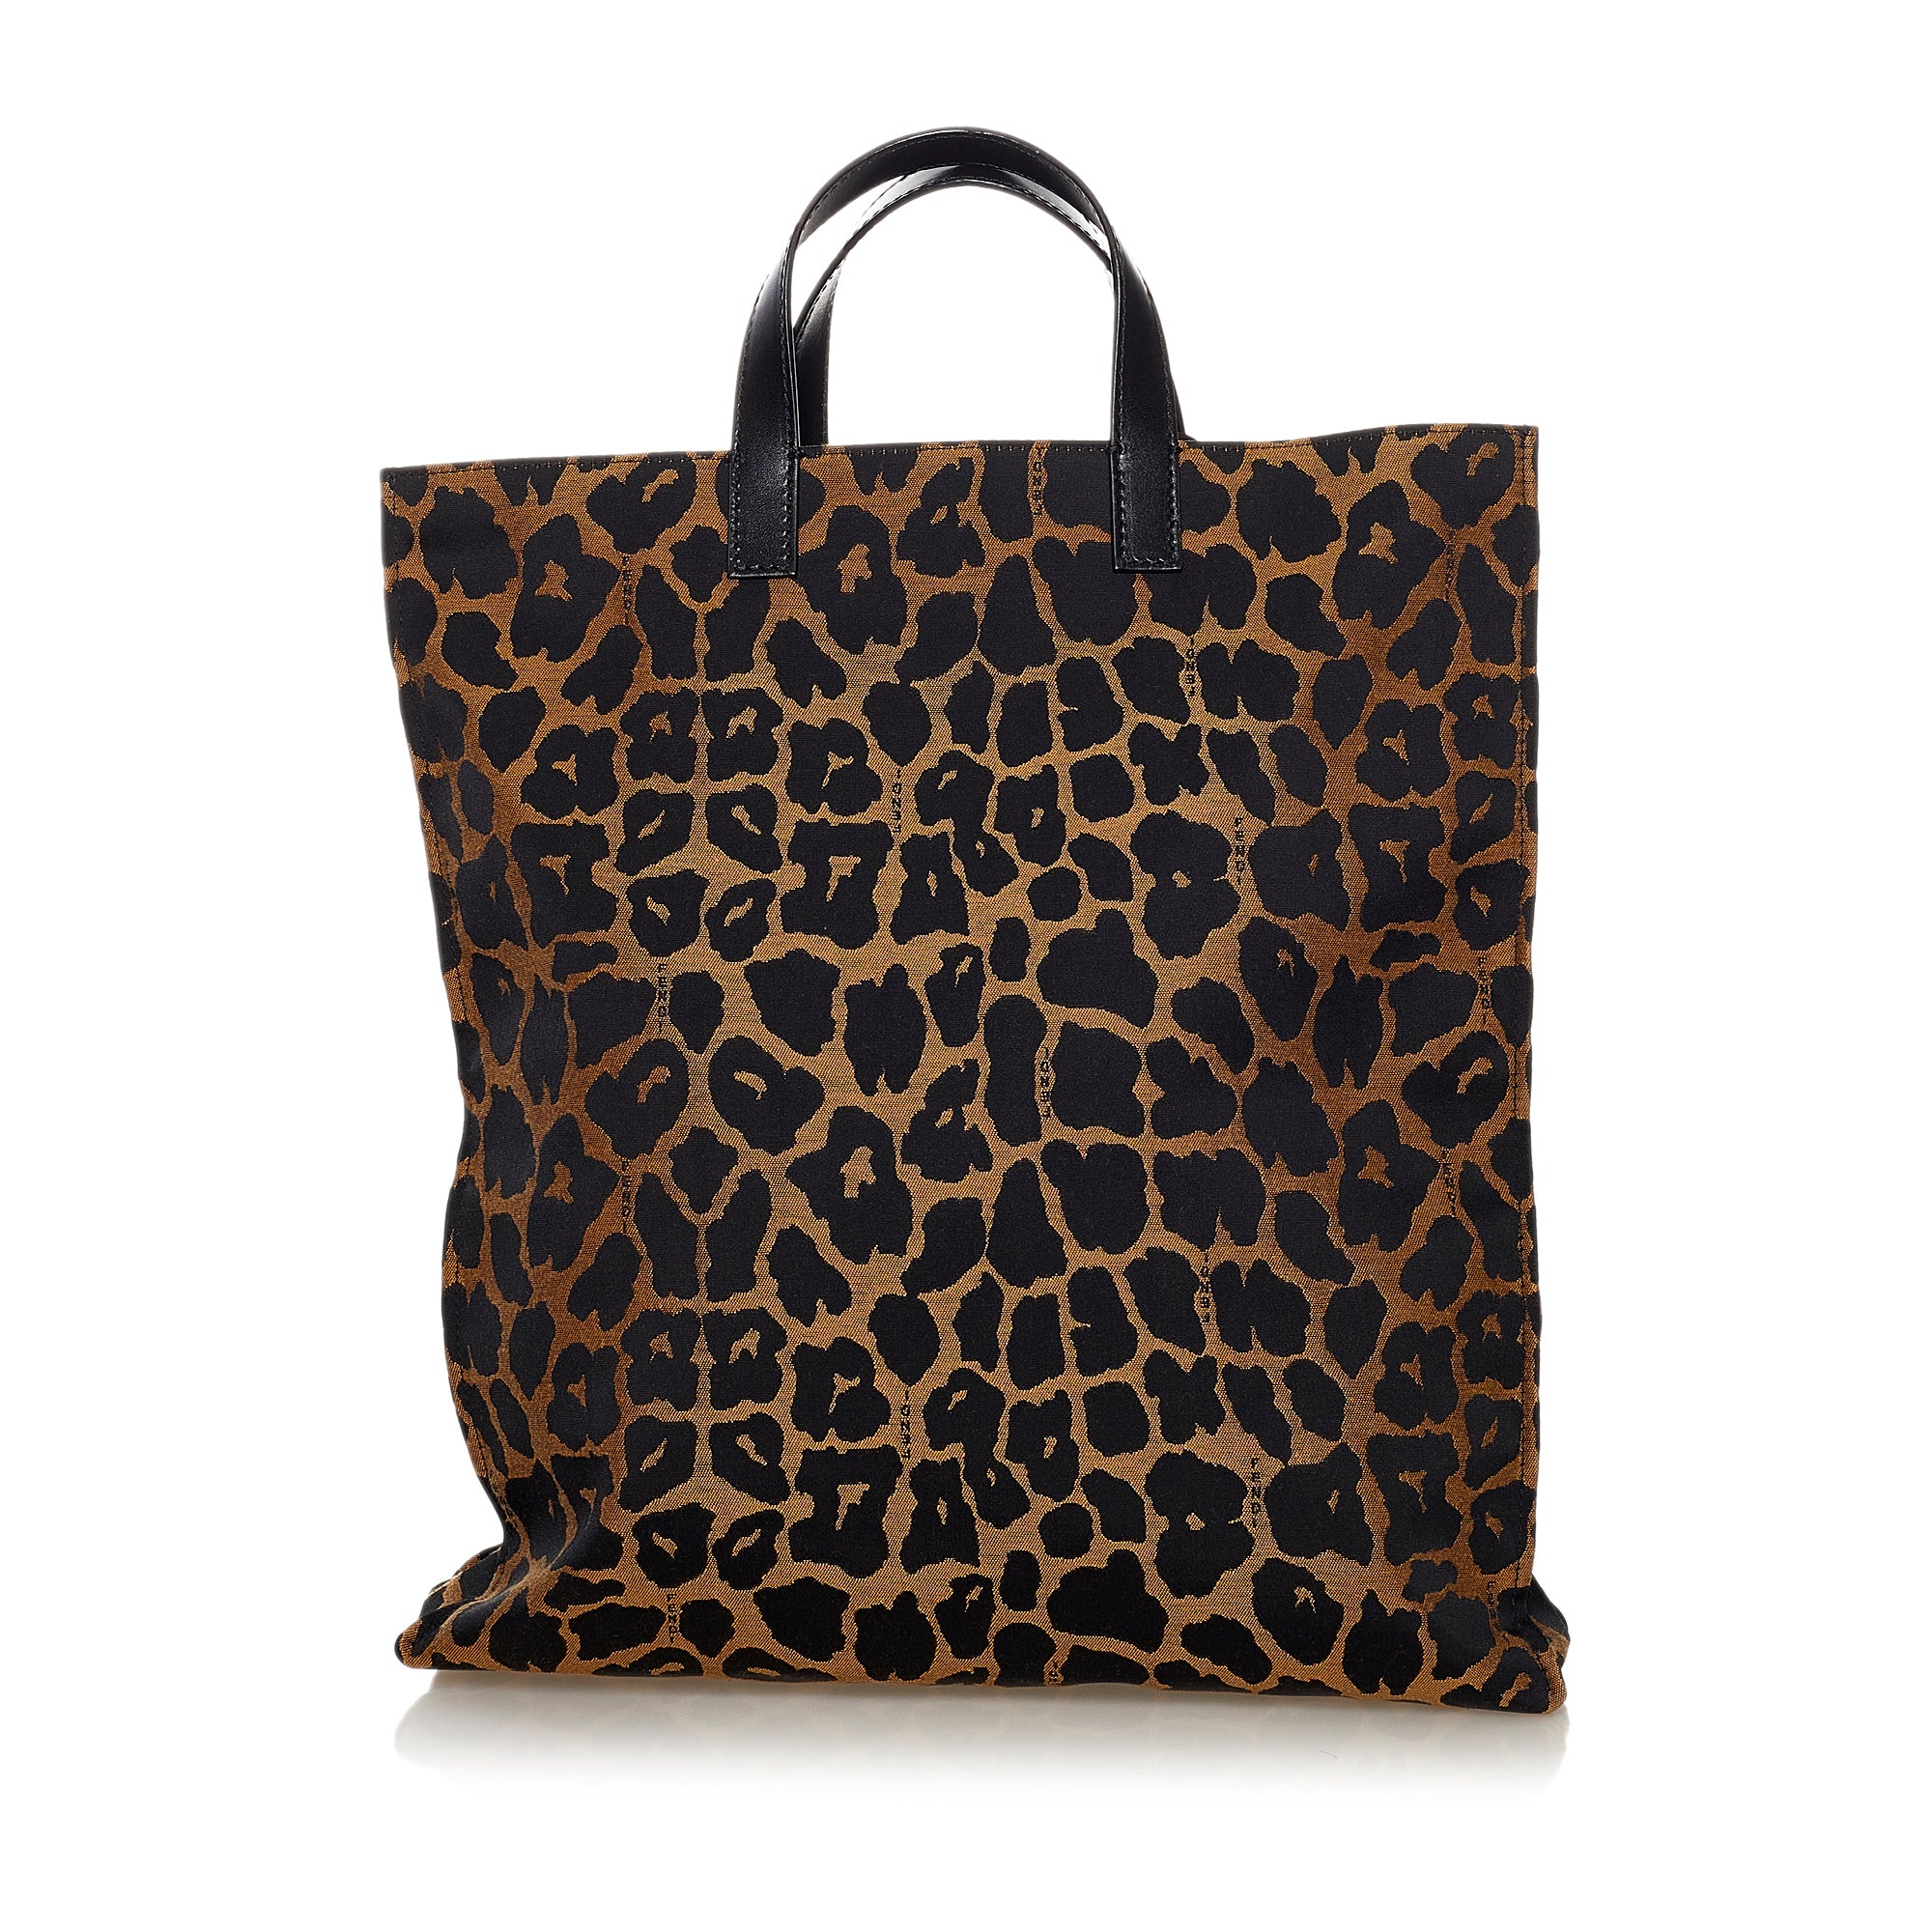 Louis Vuitton Canvas Exterior Animal Print Bags & Handbags for Women, Authenticity Guaranteed